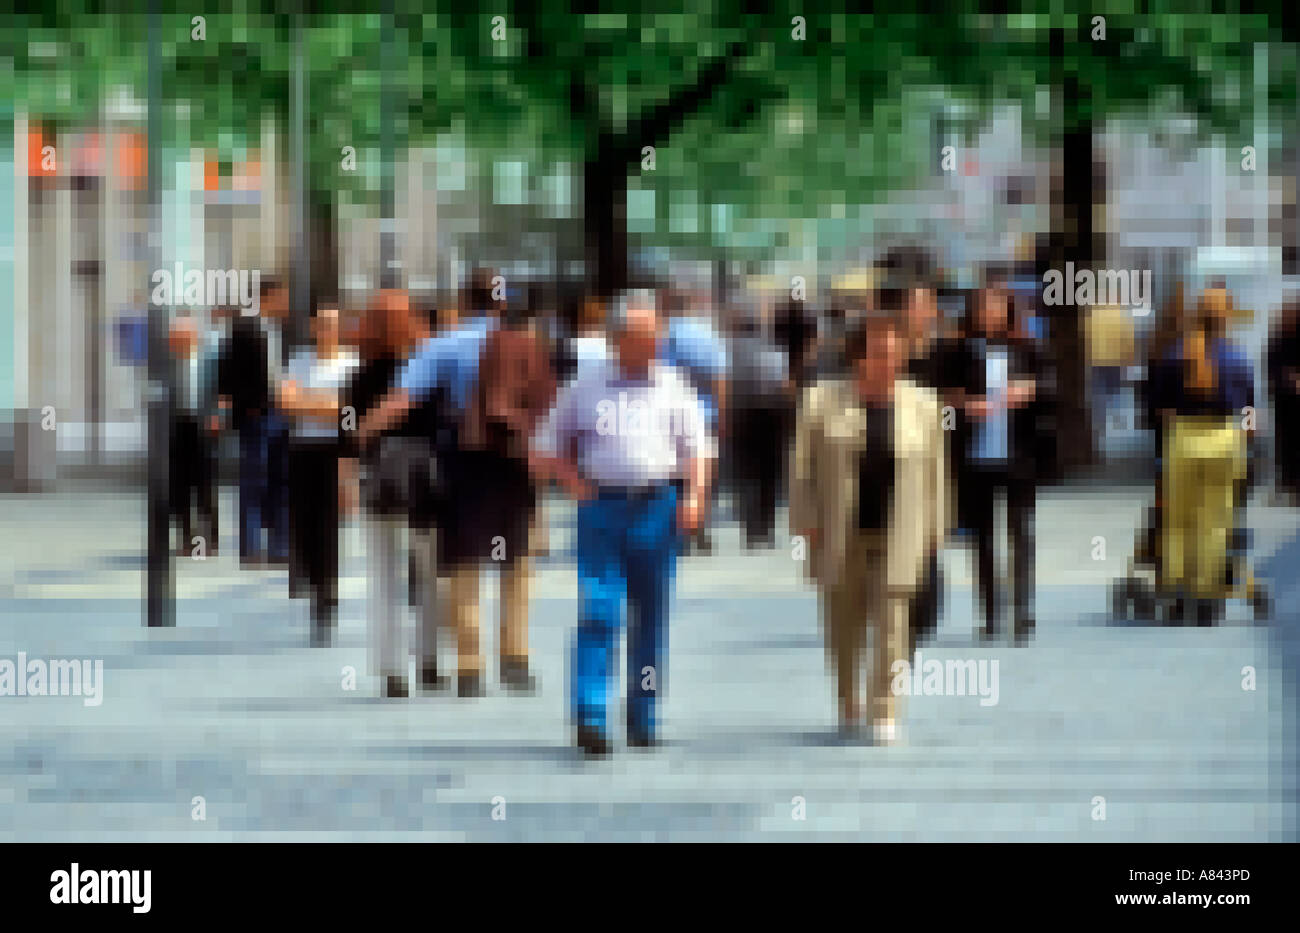 People strolling through a pedestrian precinct Pixelated Stock Photo